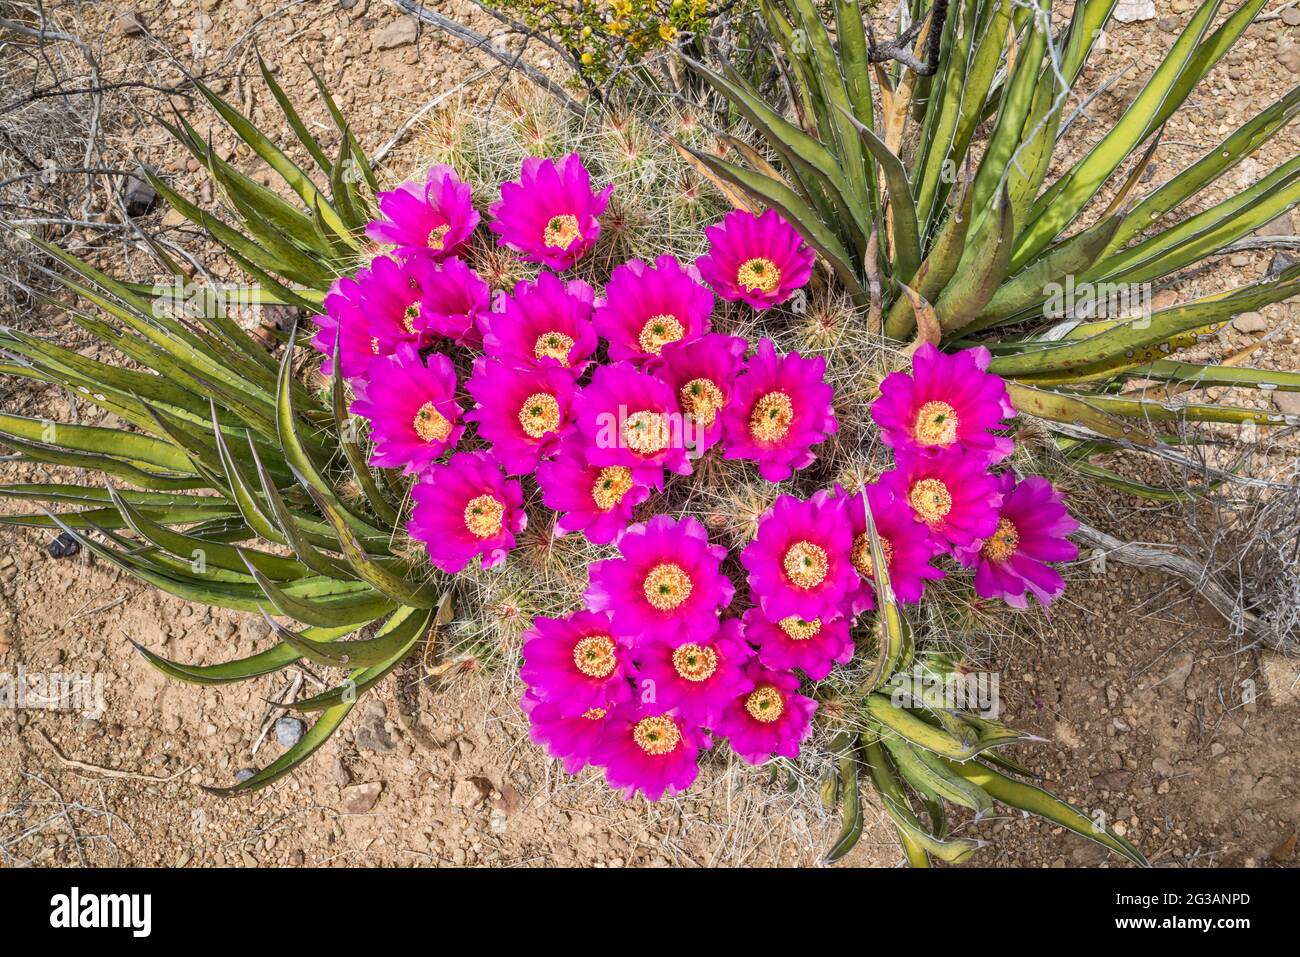 Strawberry cactus, lechuguilla agaves in bloom, El Solitario area, Big Bend Ranch State Park, Texas, USA Stock Photo